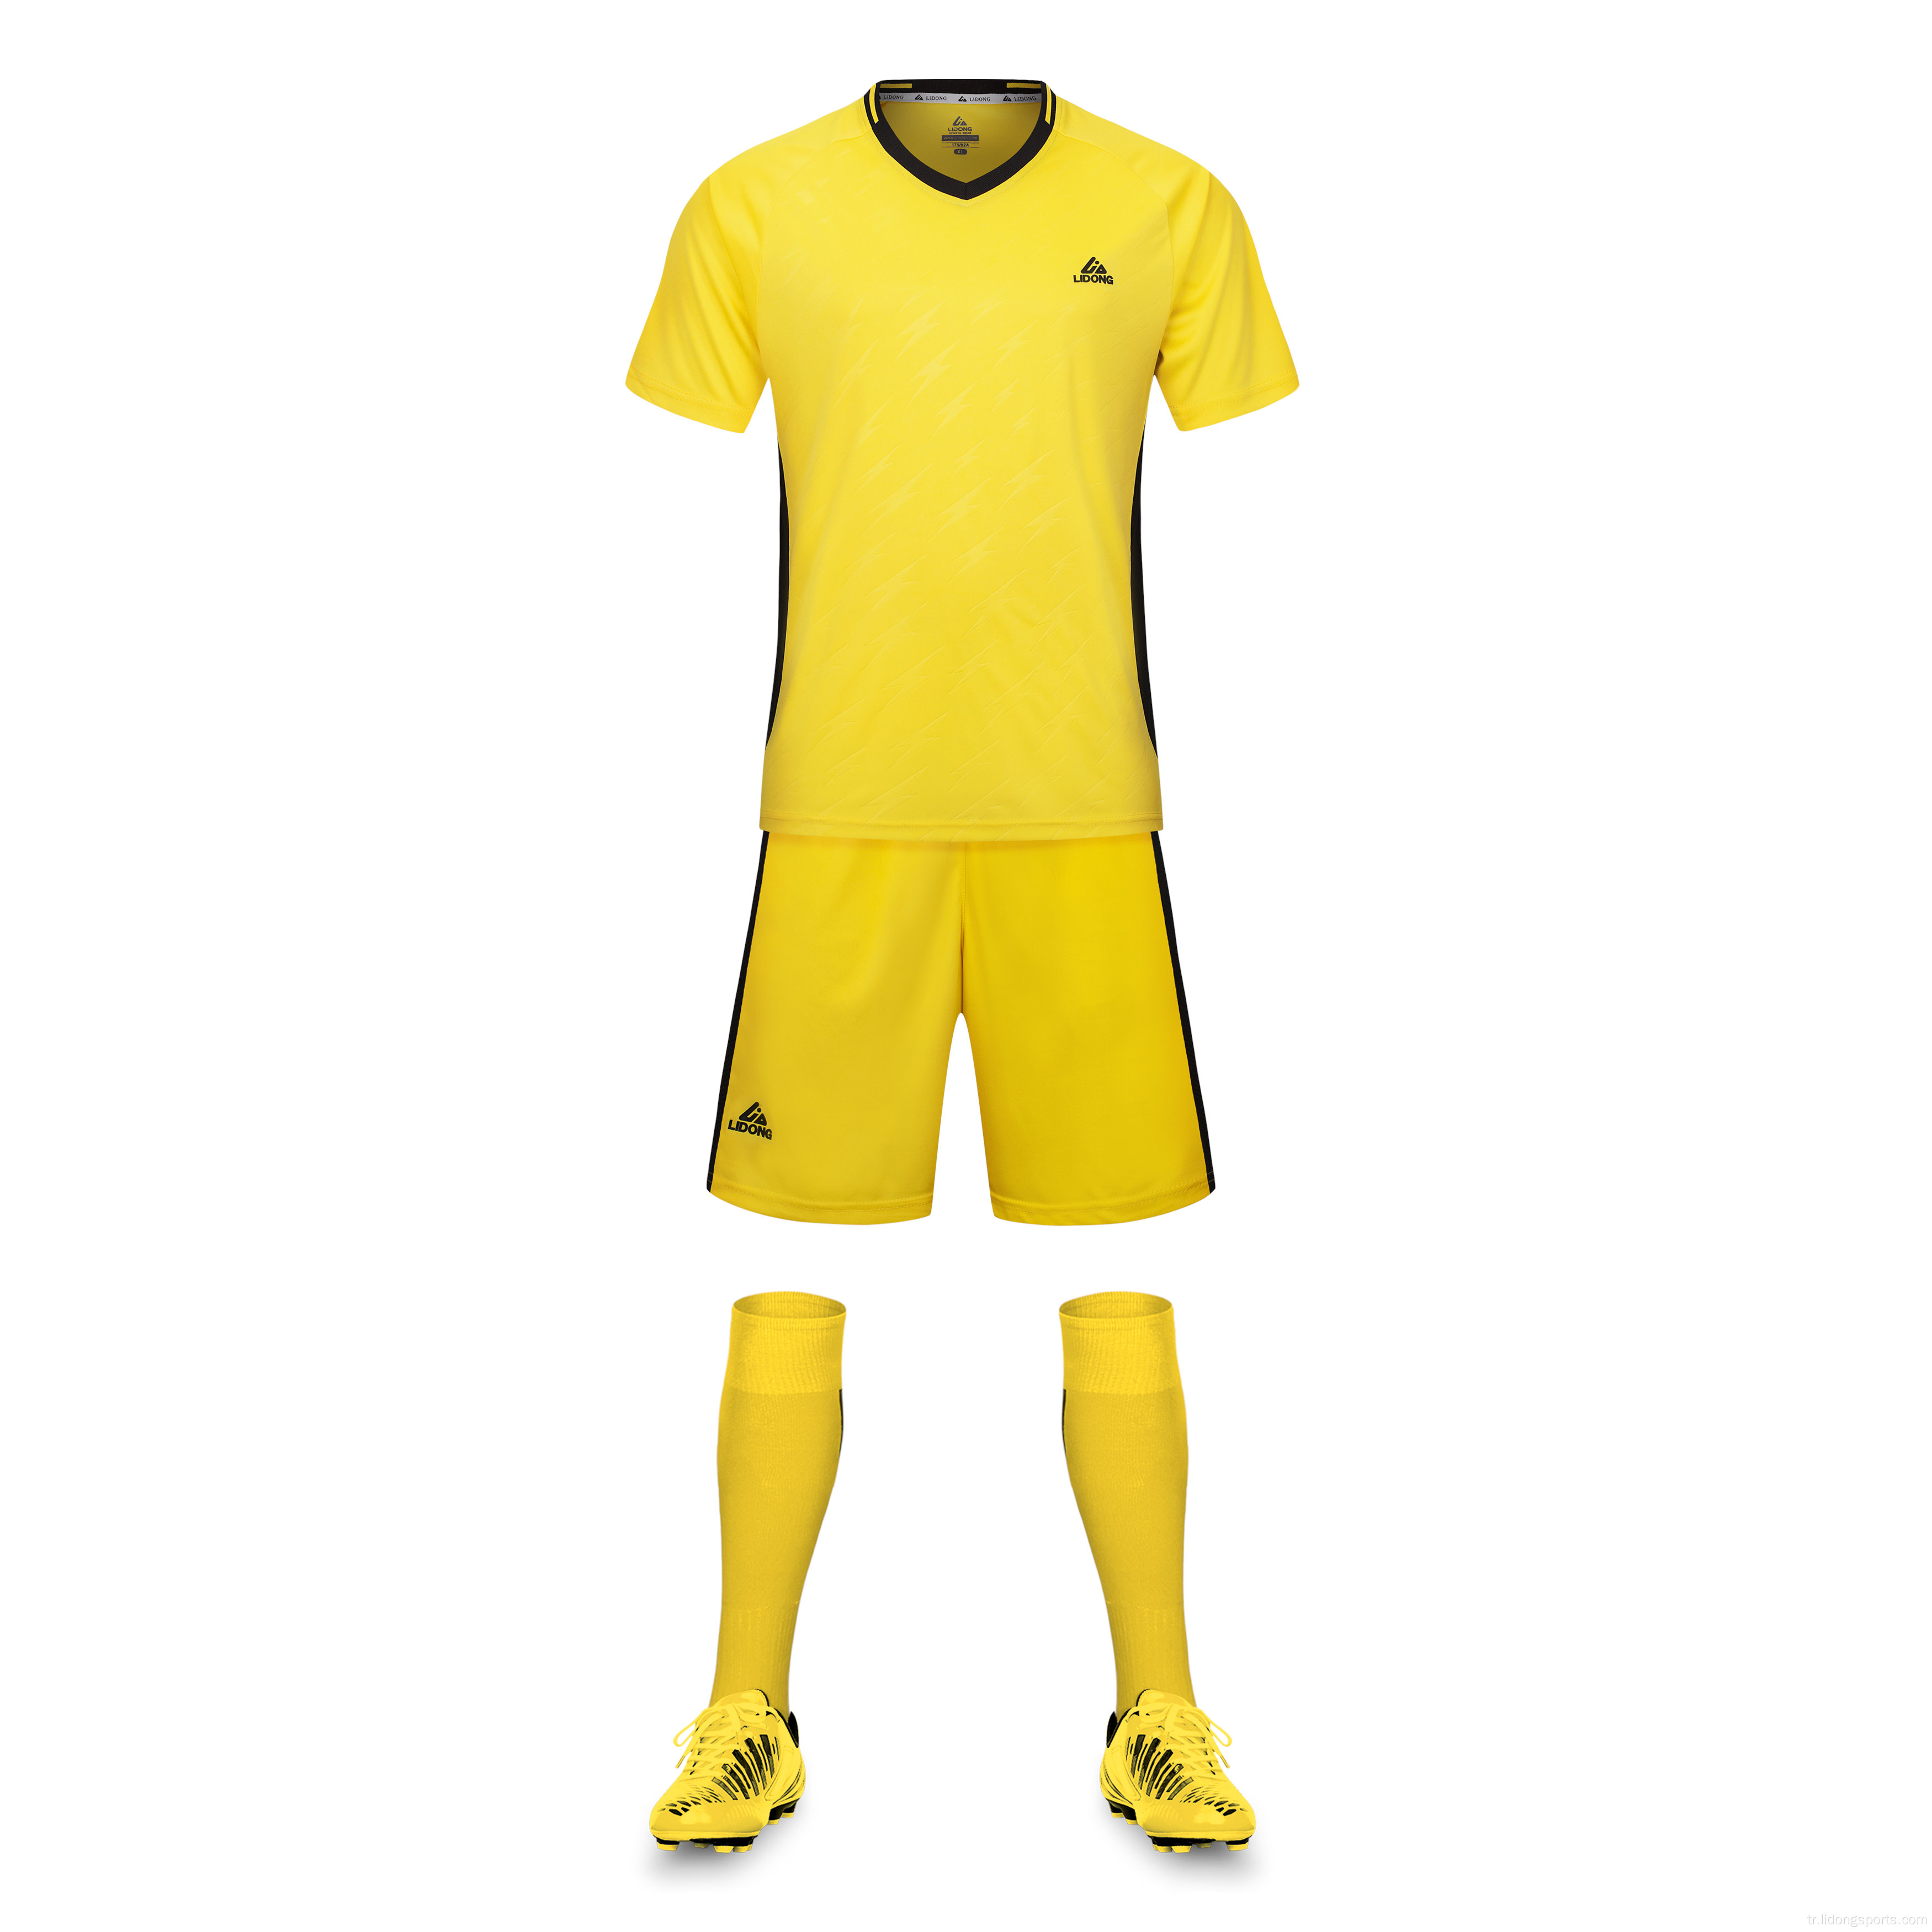 Üniforma Futbol Futbol Gömlek Makinesi Futbol Forması Tasarımı